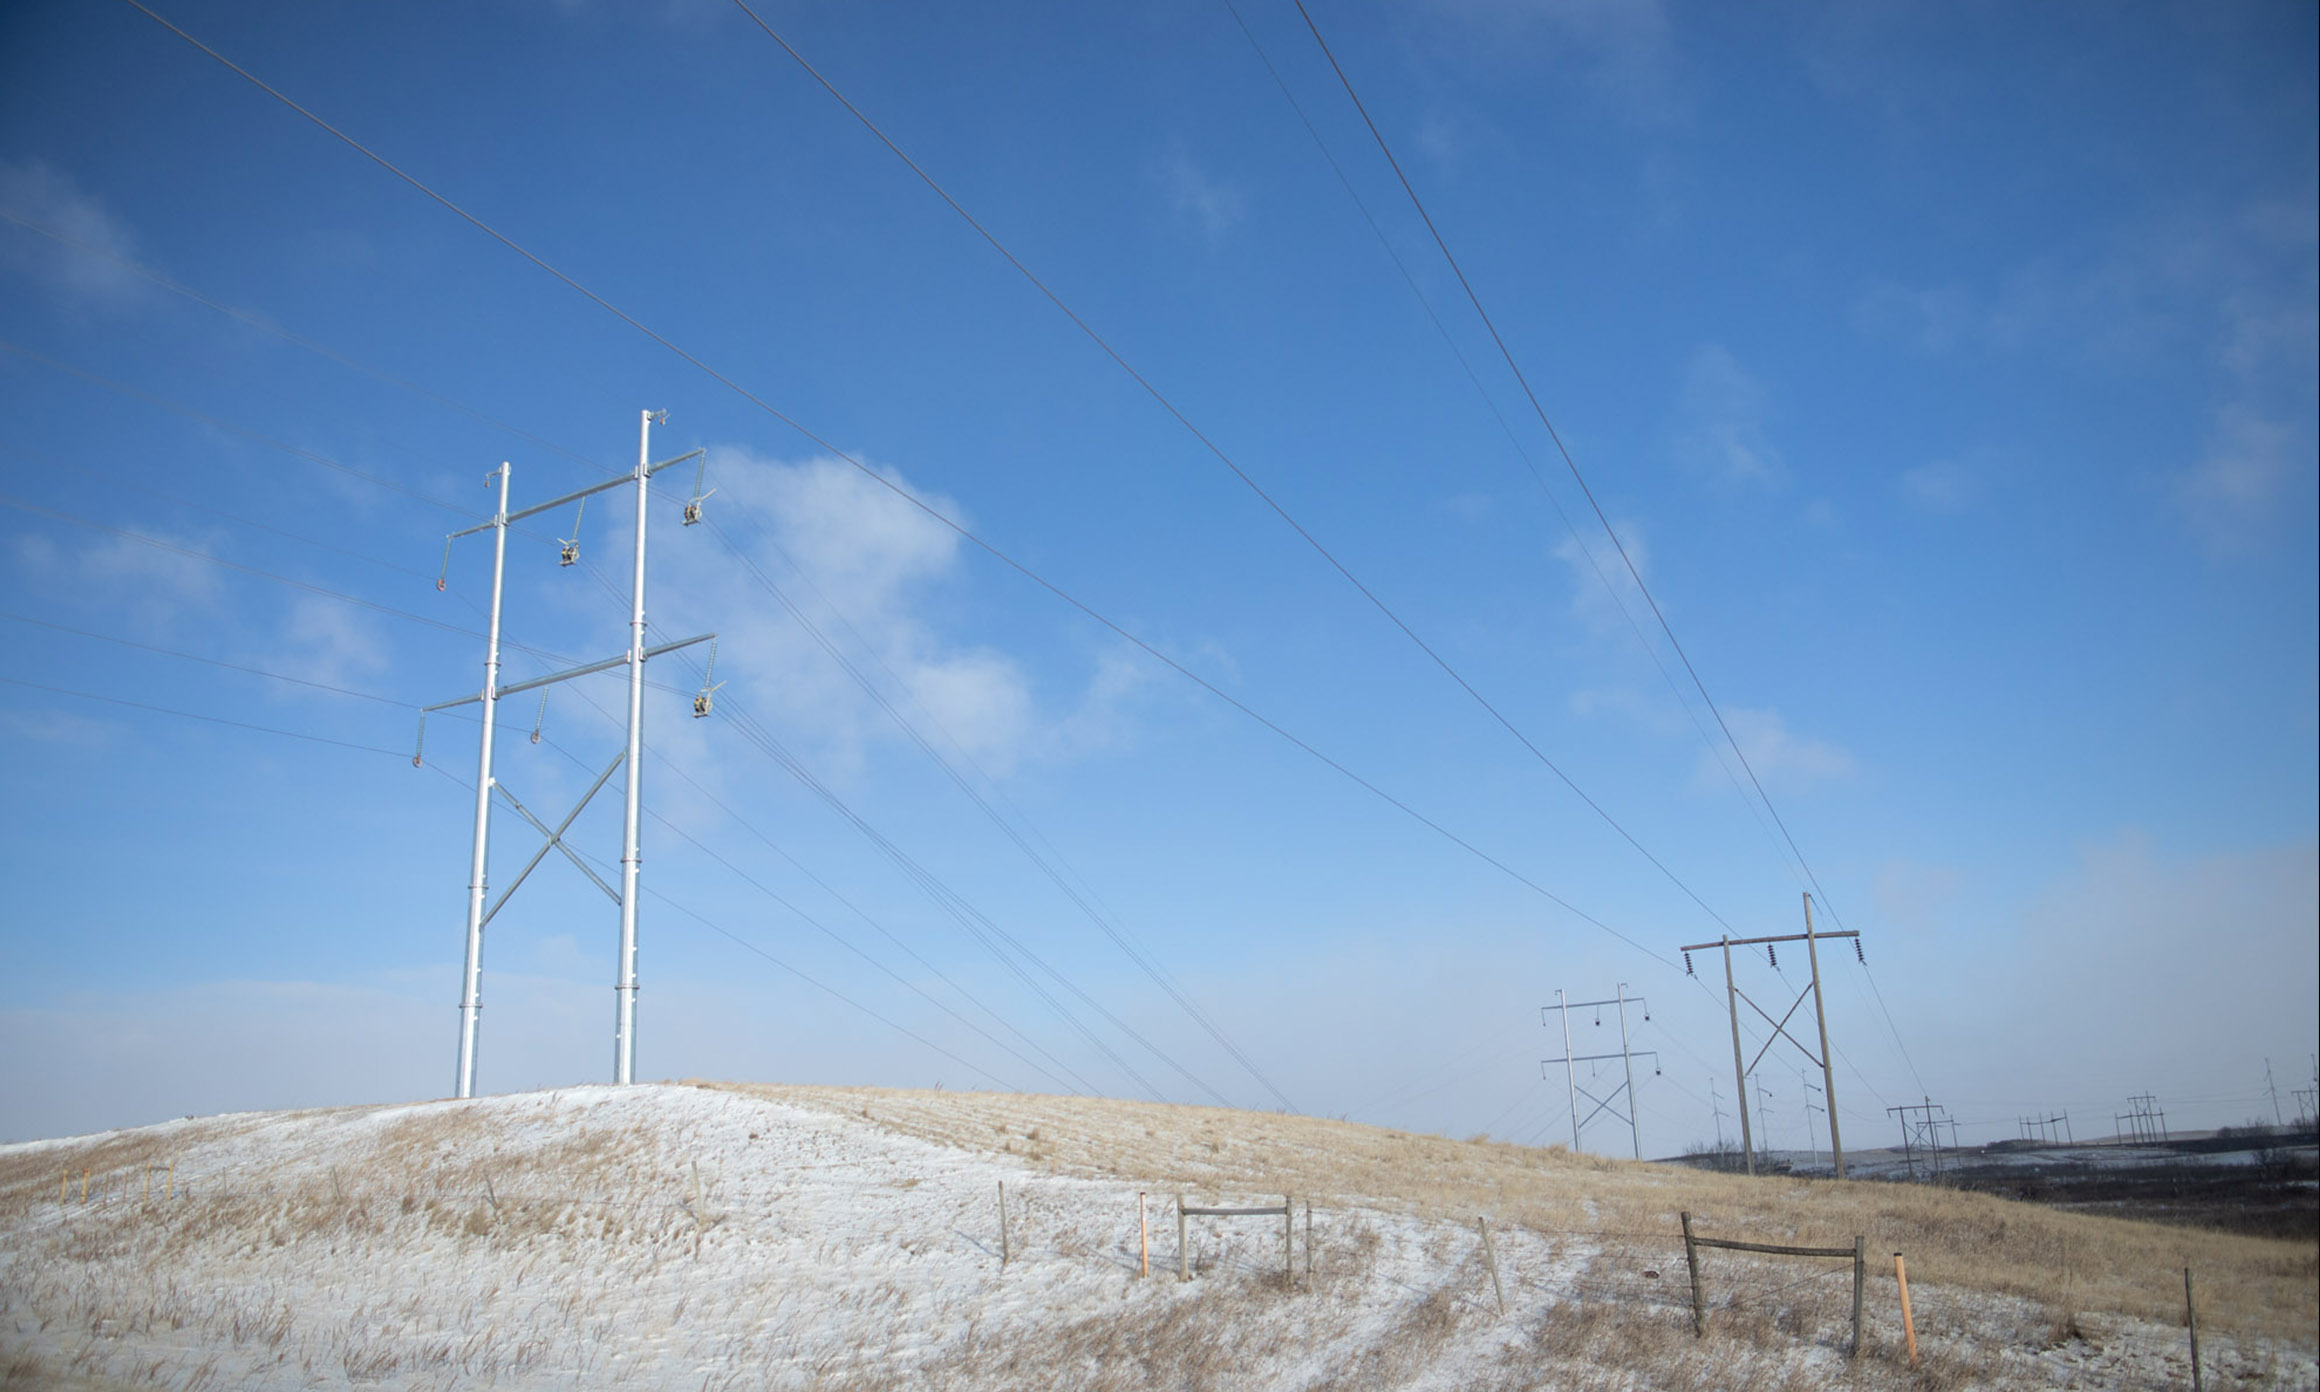 Transmission Lines on a snowy Saskatchewan field